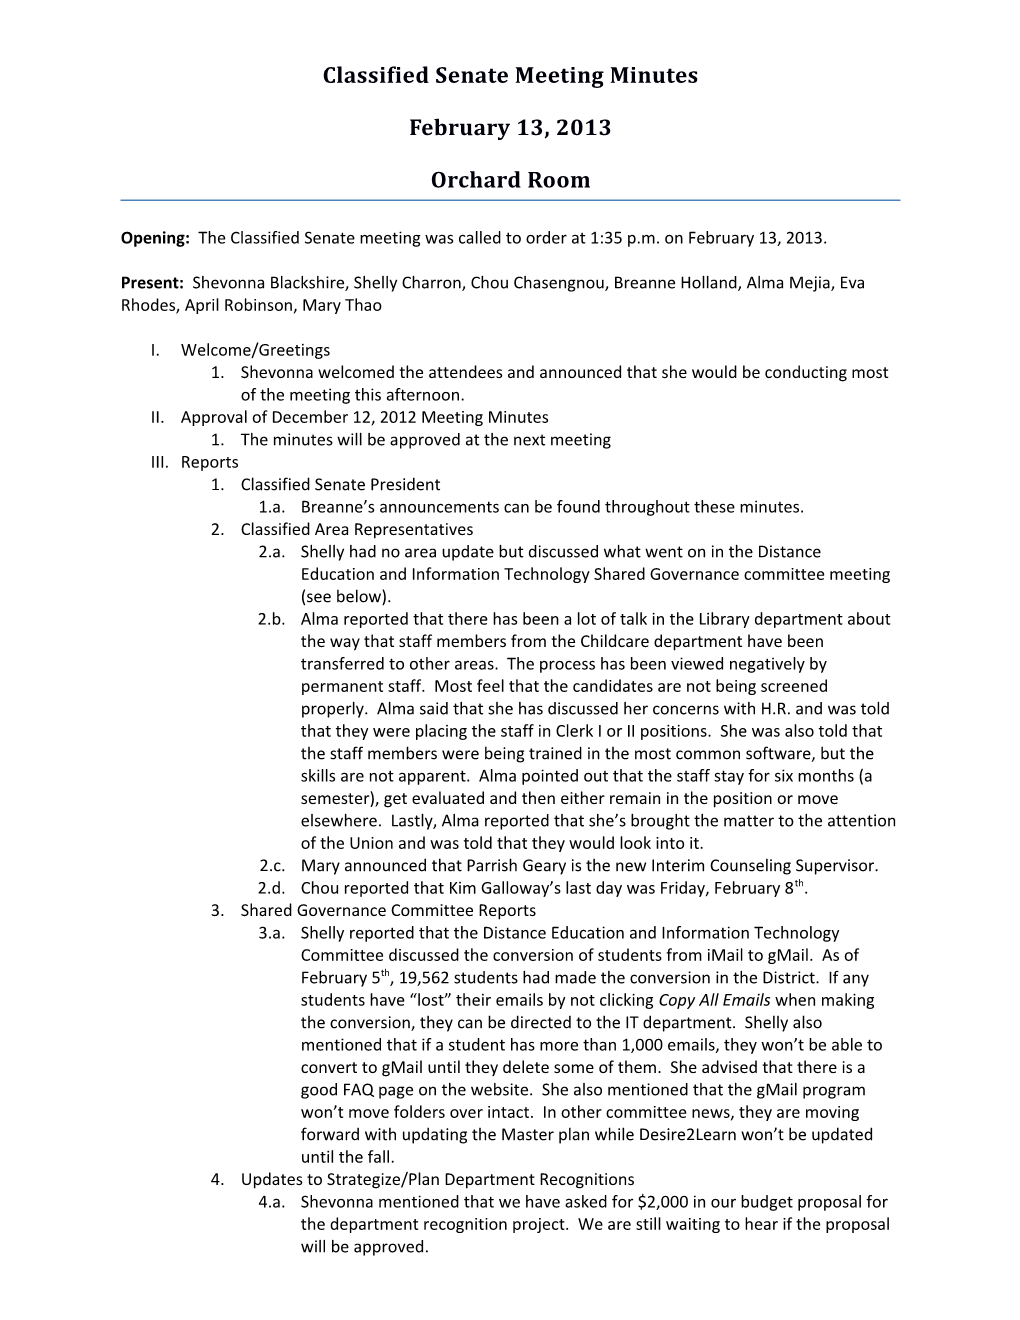 Classified Senate Meeting Minutes (2/13/13)